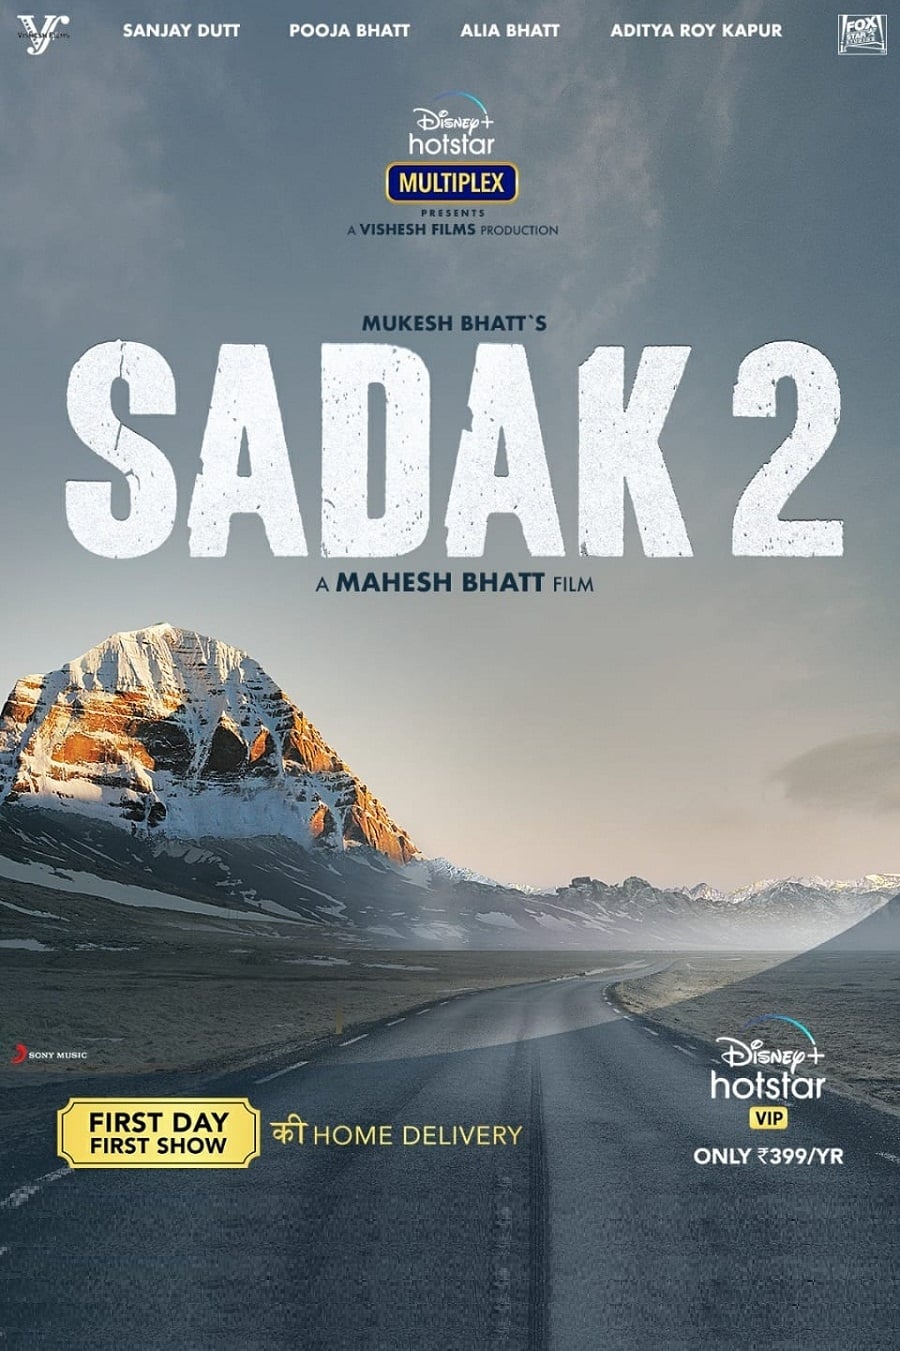 Poster for the movie "Sadak 2"